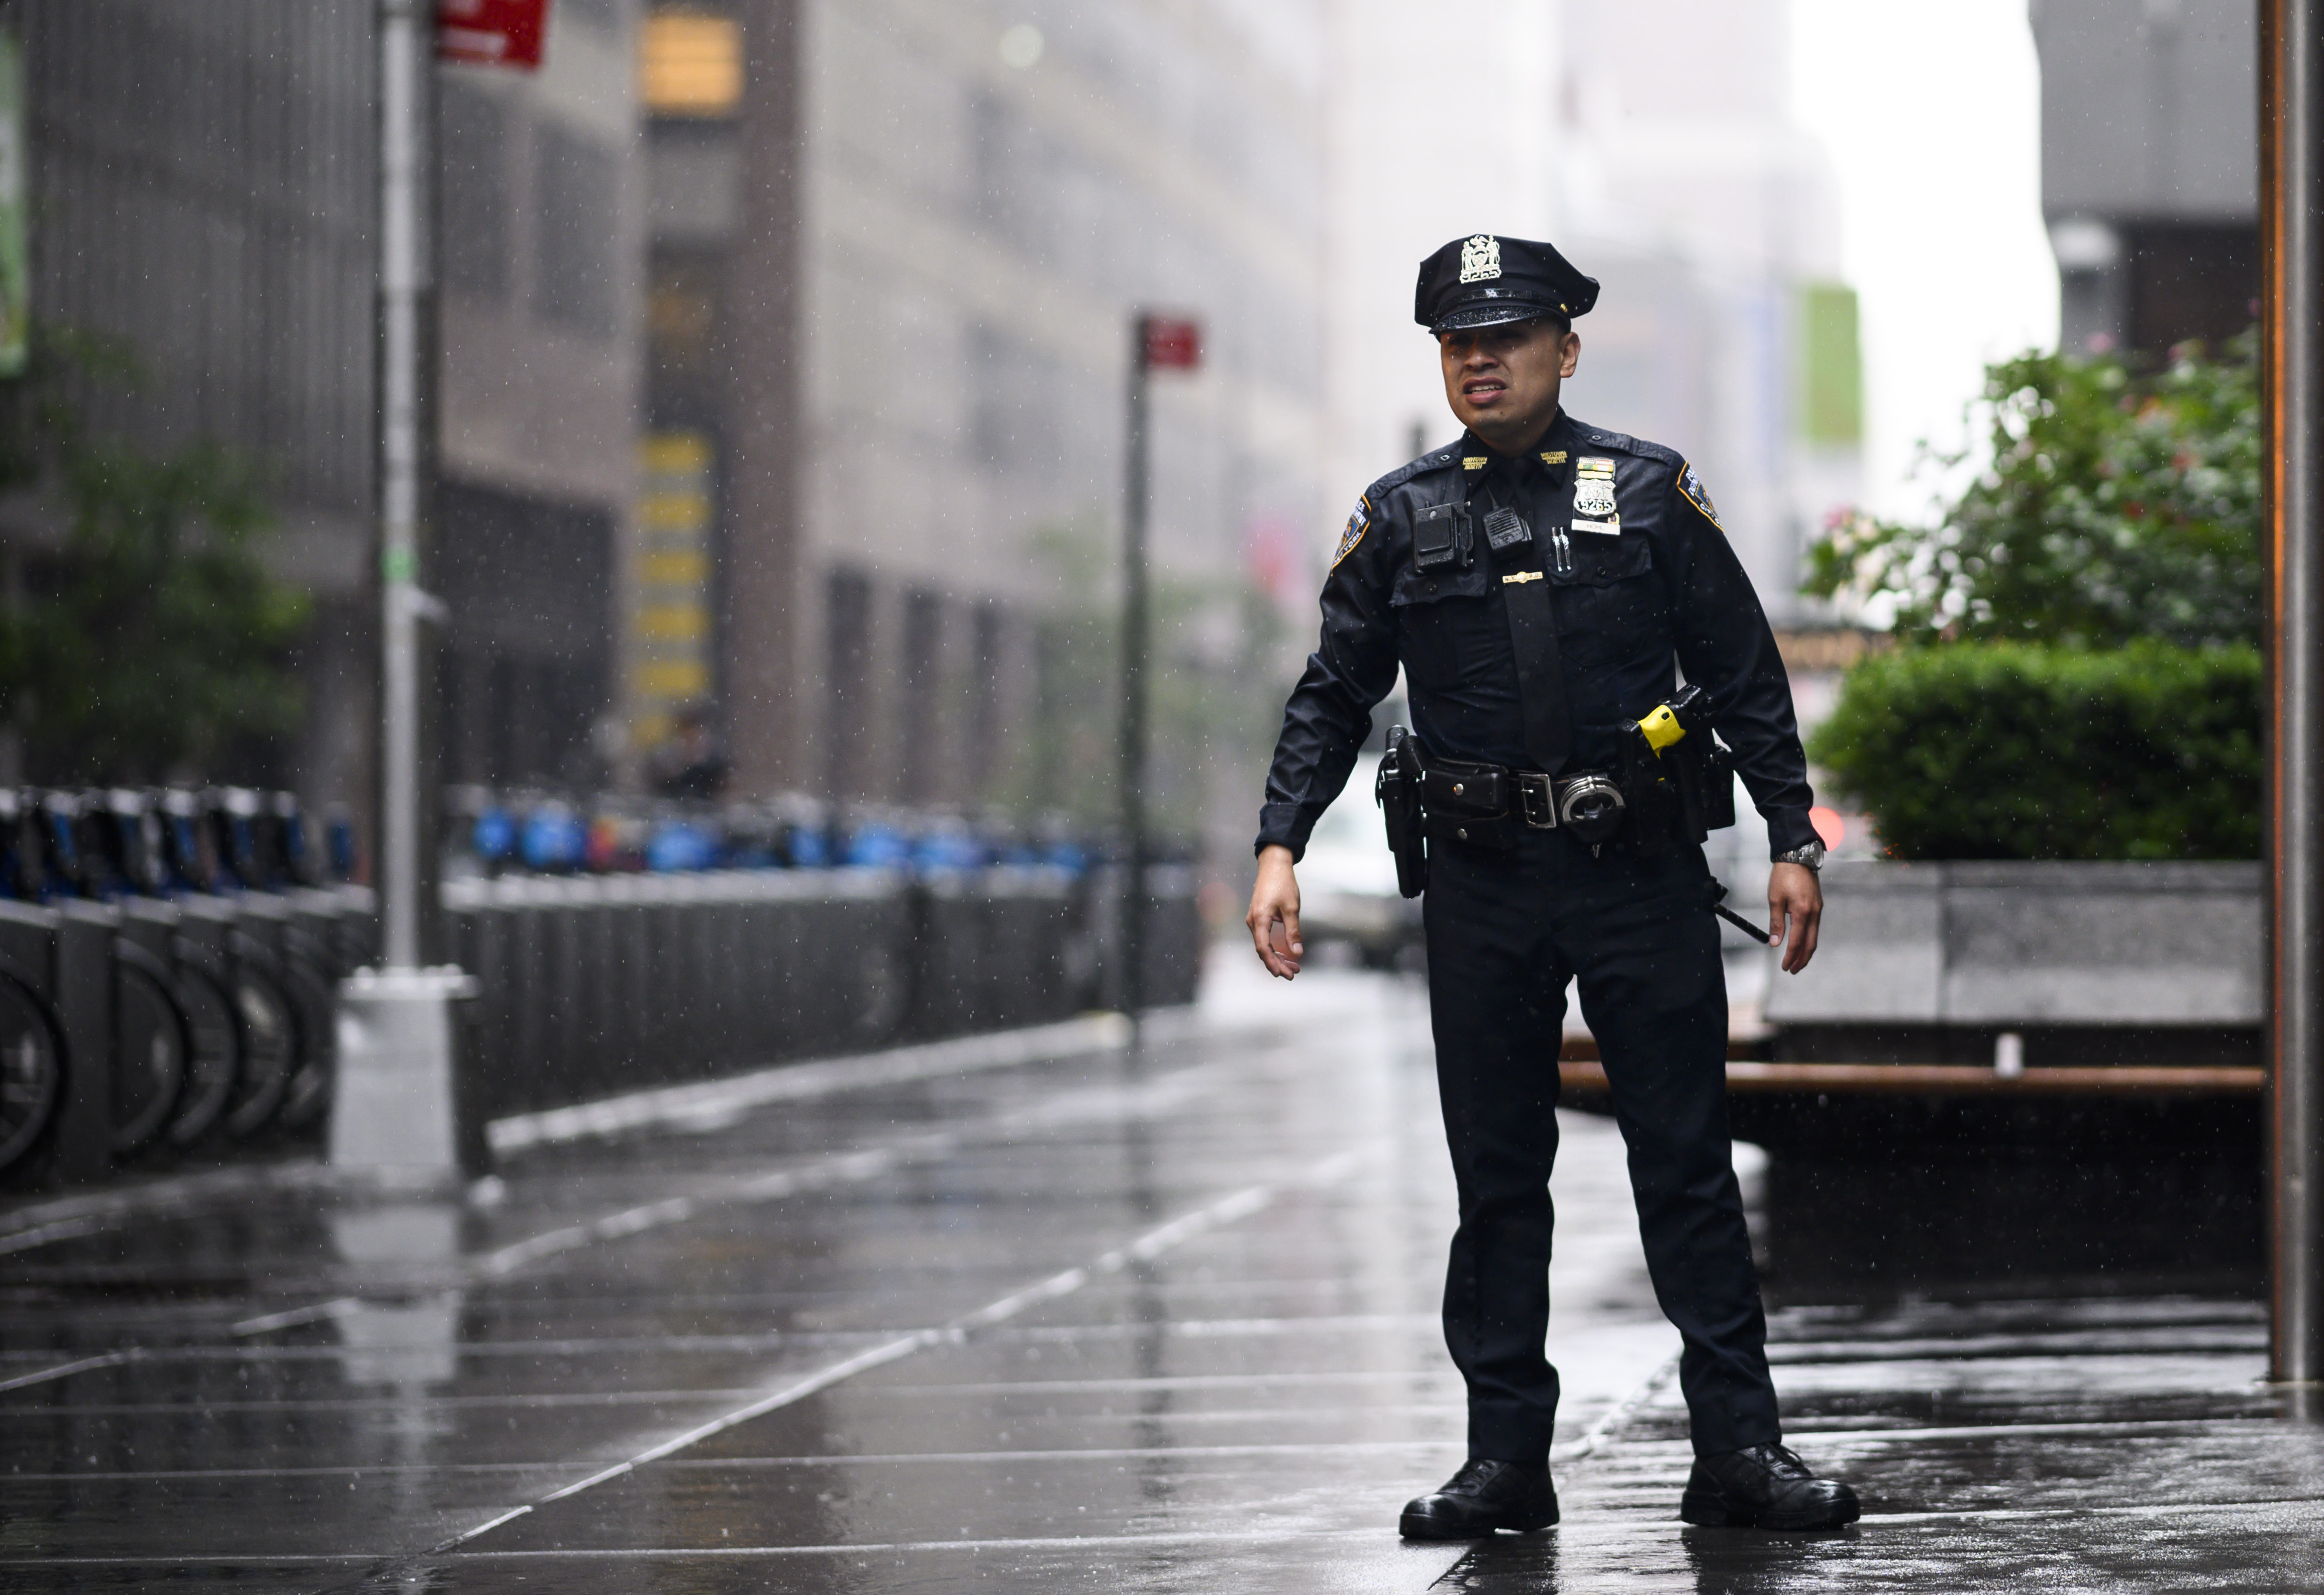 The policeman asked what. NYPD Police униформа. Мем полис. Полицейский офицер. Форма полиции Нью-Йорка.